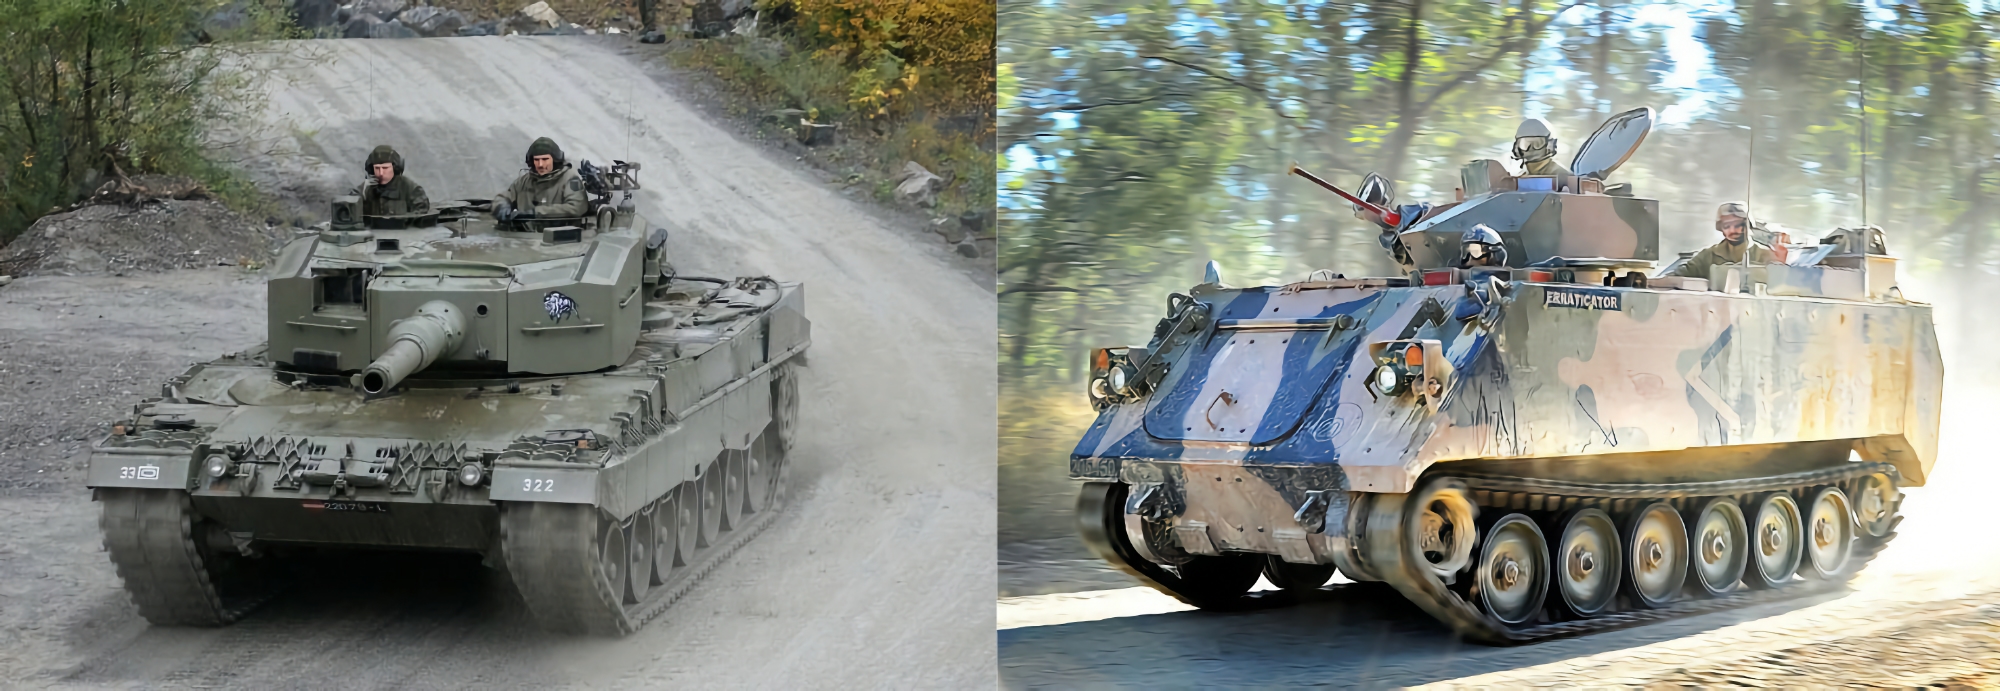 Spanje begint met overdracht van Leopard 2A4 tanks en M113 pantserwagens aan Oekraïne